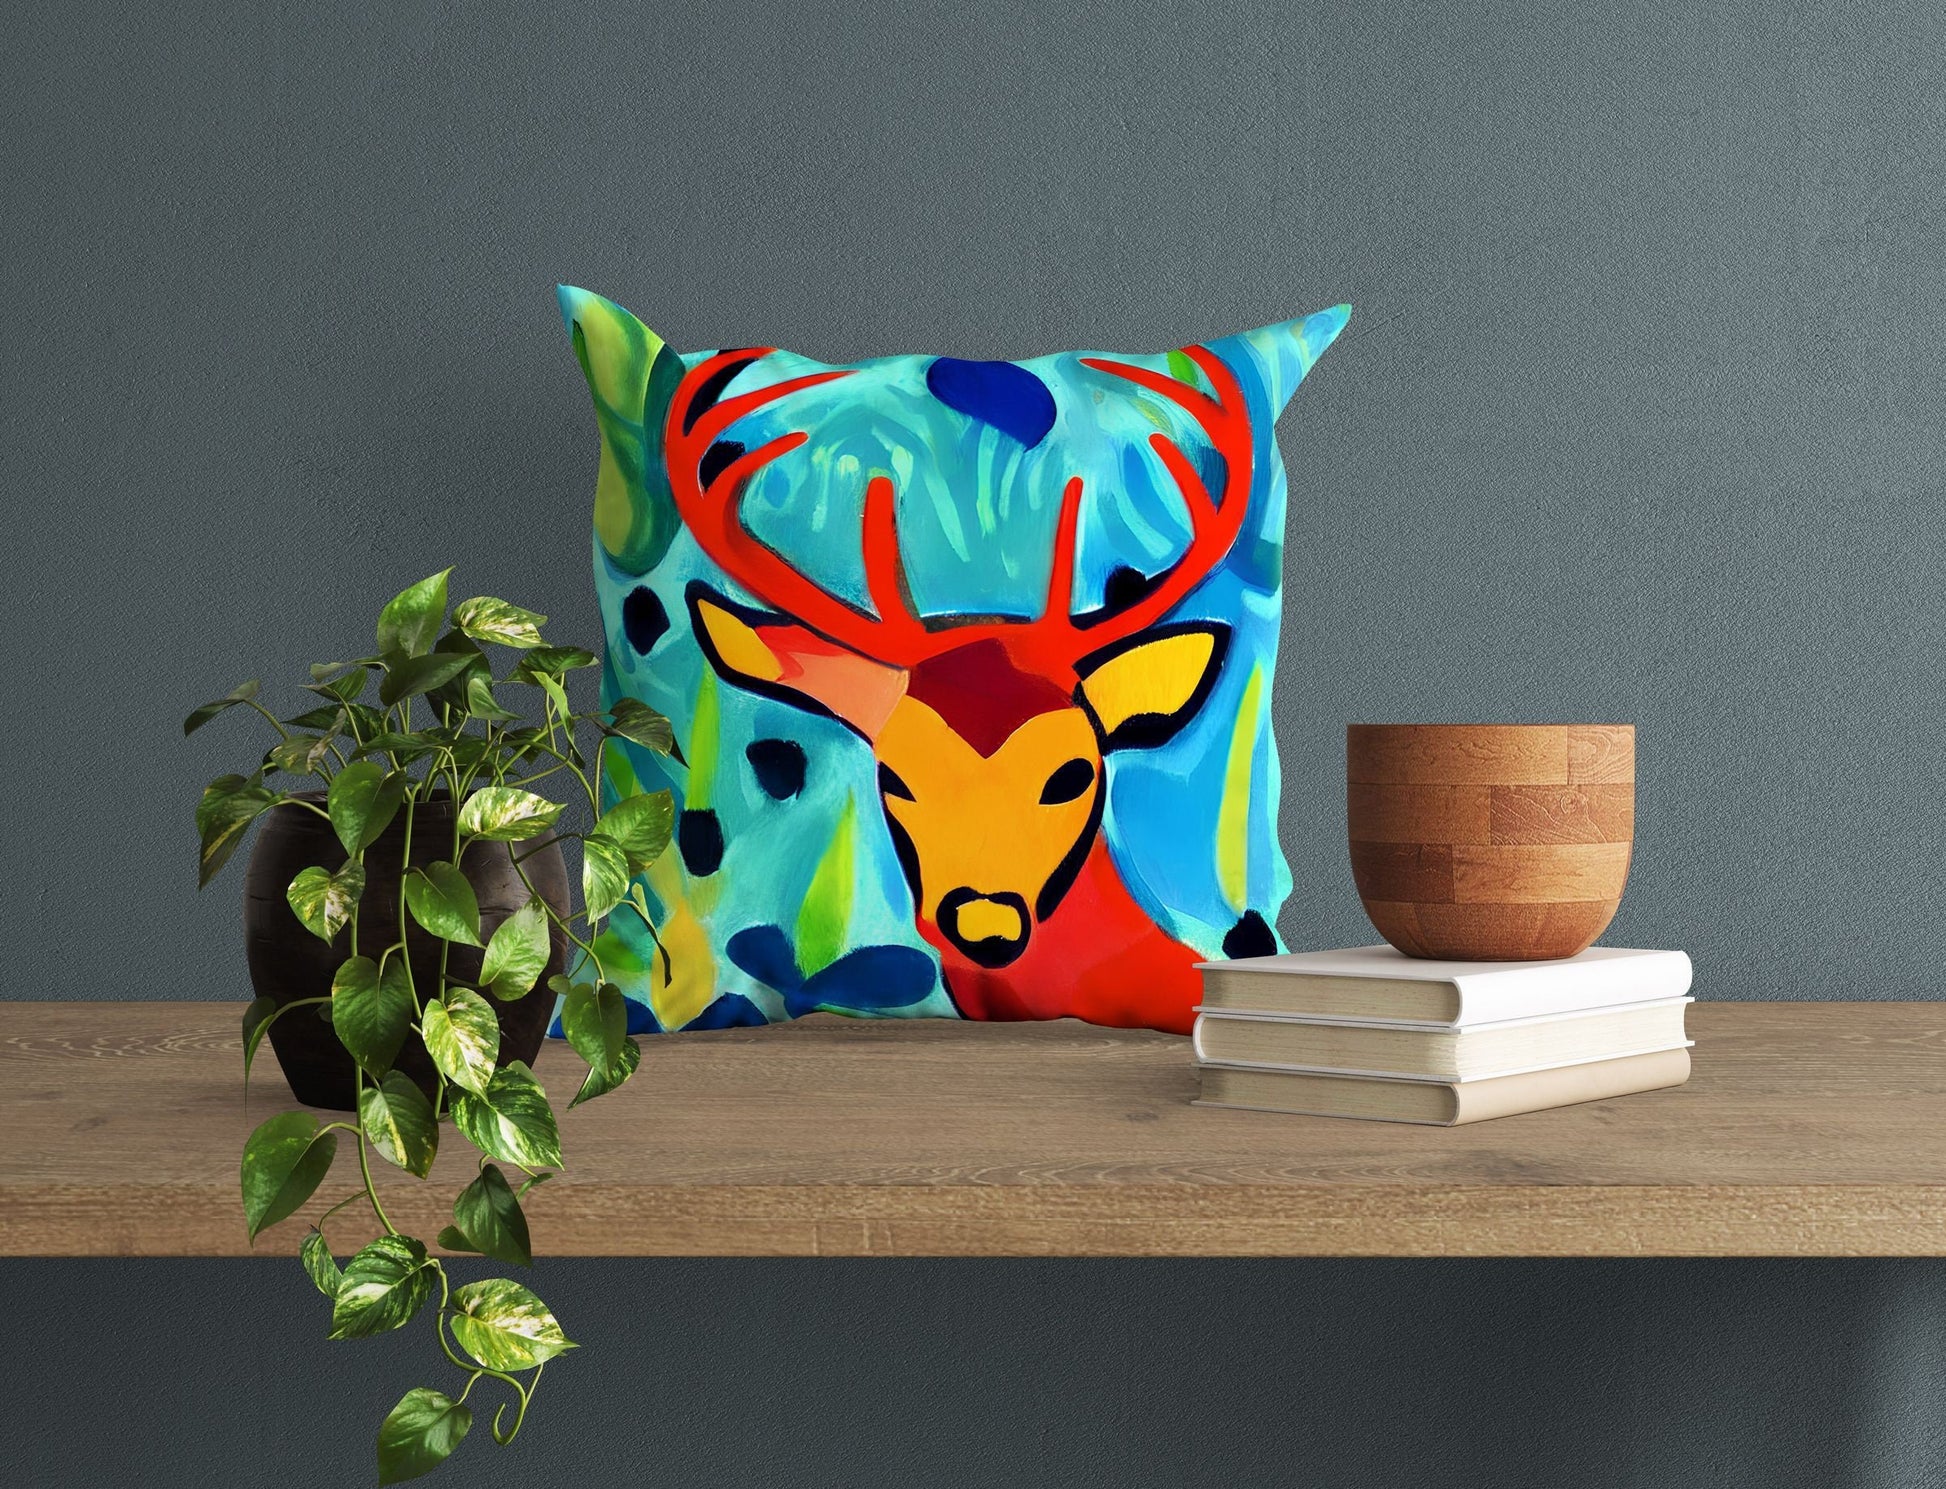 Original Art Wildlife Deer Decorative Pillow, Bee Pillow Cover, Designer Pillow, Square Pillow, Home Decor Pillow, Indoor Pillow Cases